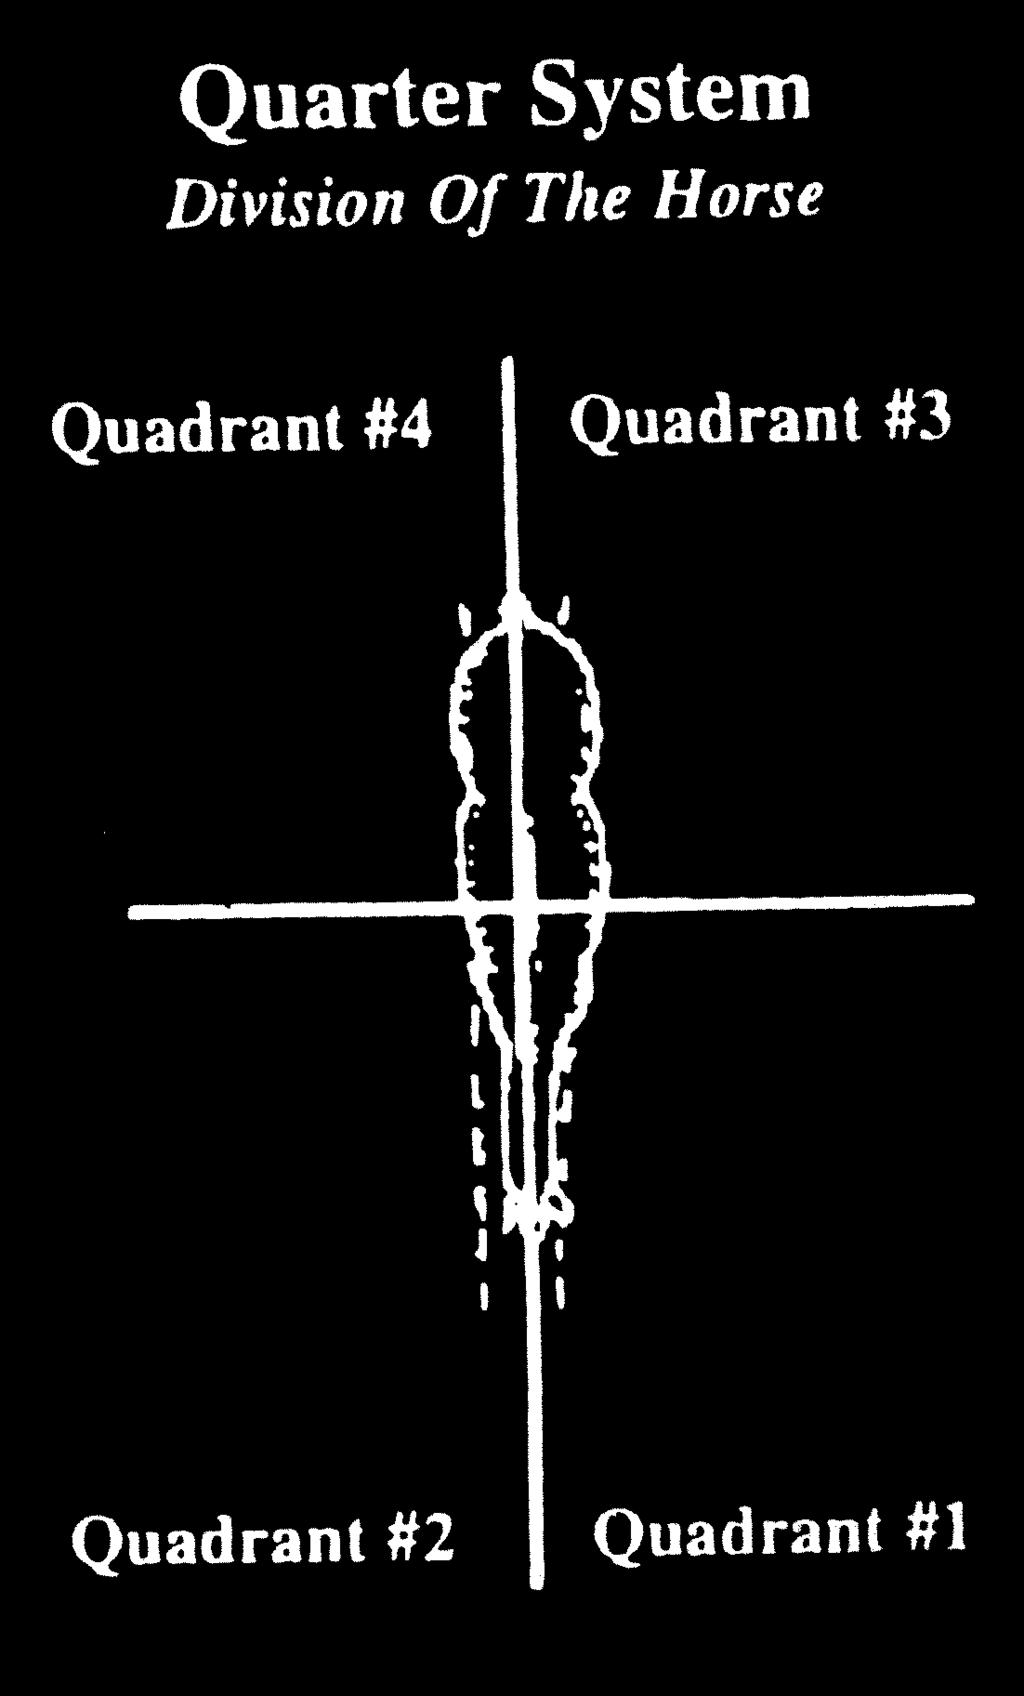 Quadrant #2 The exhibitor is in Quadrant #1 When the judge is in Quadrant